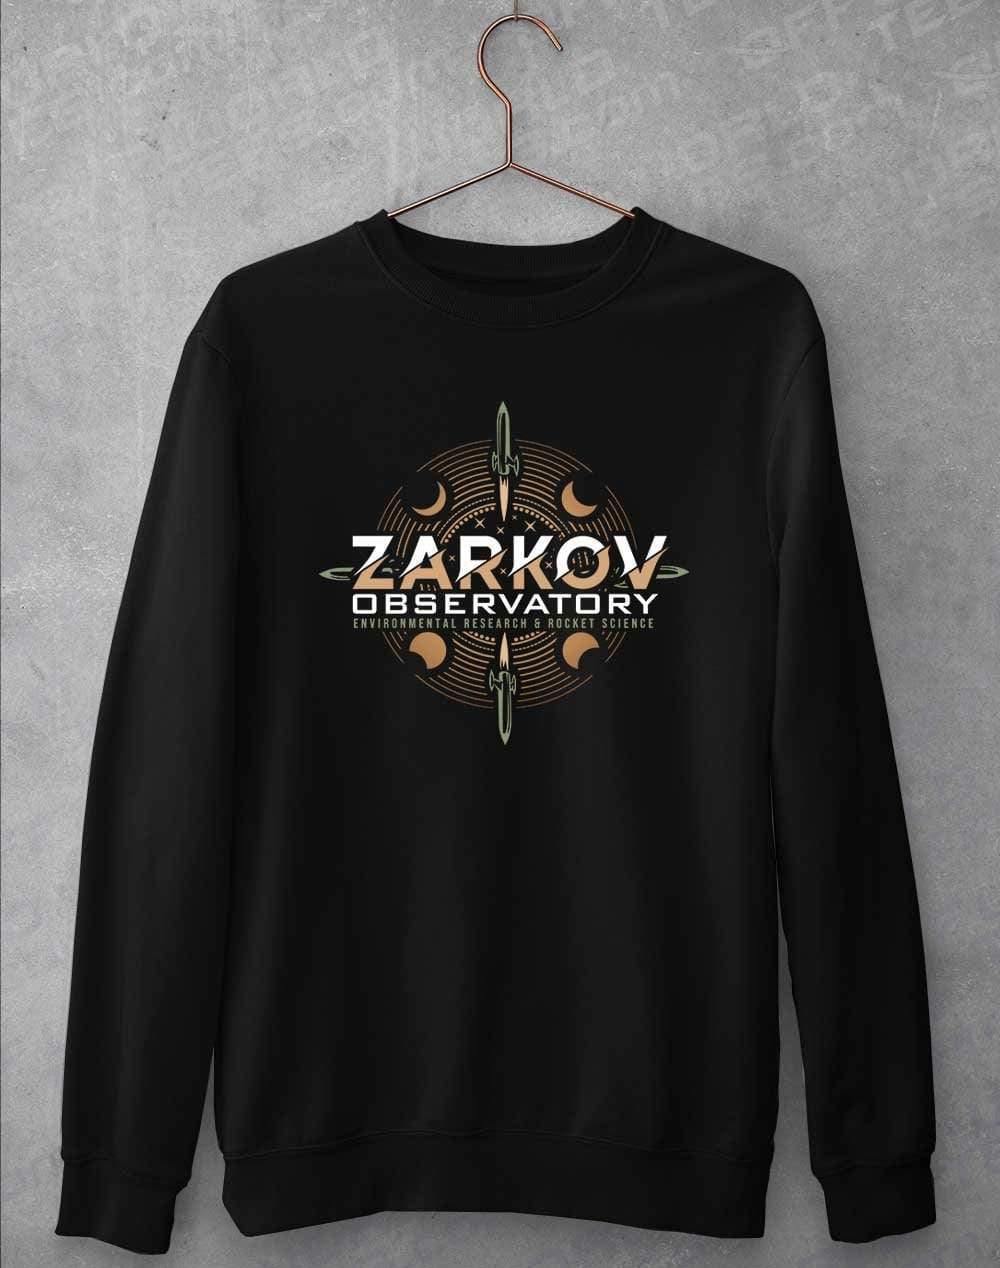 Zarkov Observatory Sweatshirt S / Jet Black  - Off World Tees